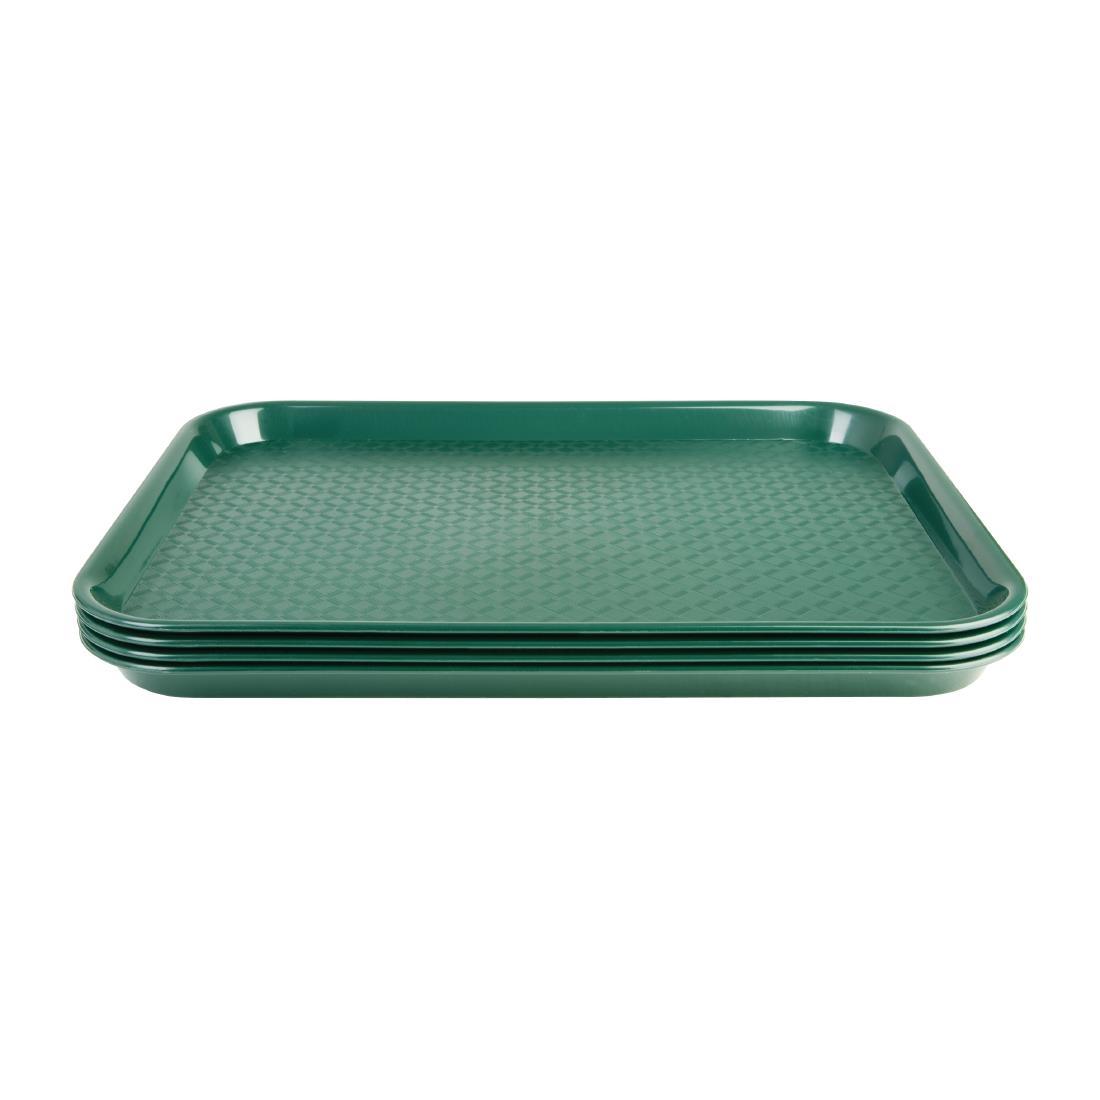 Olympia Kristallon Small Polypropylene Fast Food Tray Green 345mm - DP214  - 3